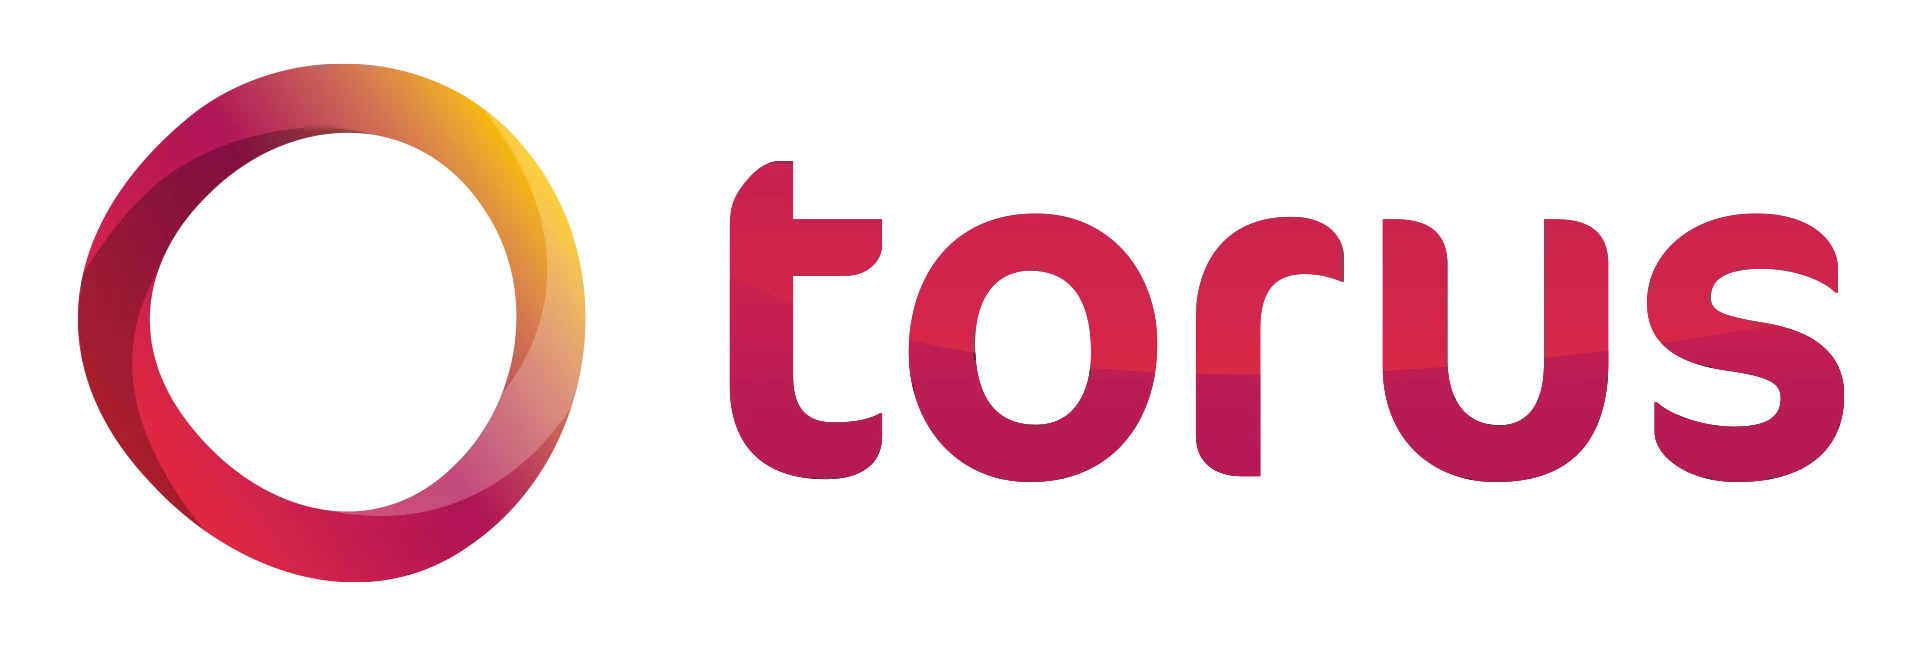 Torus logo landscape large